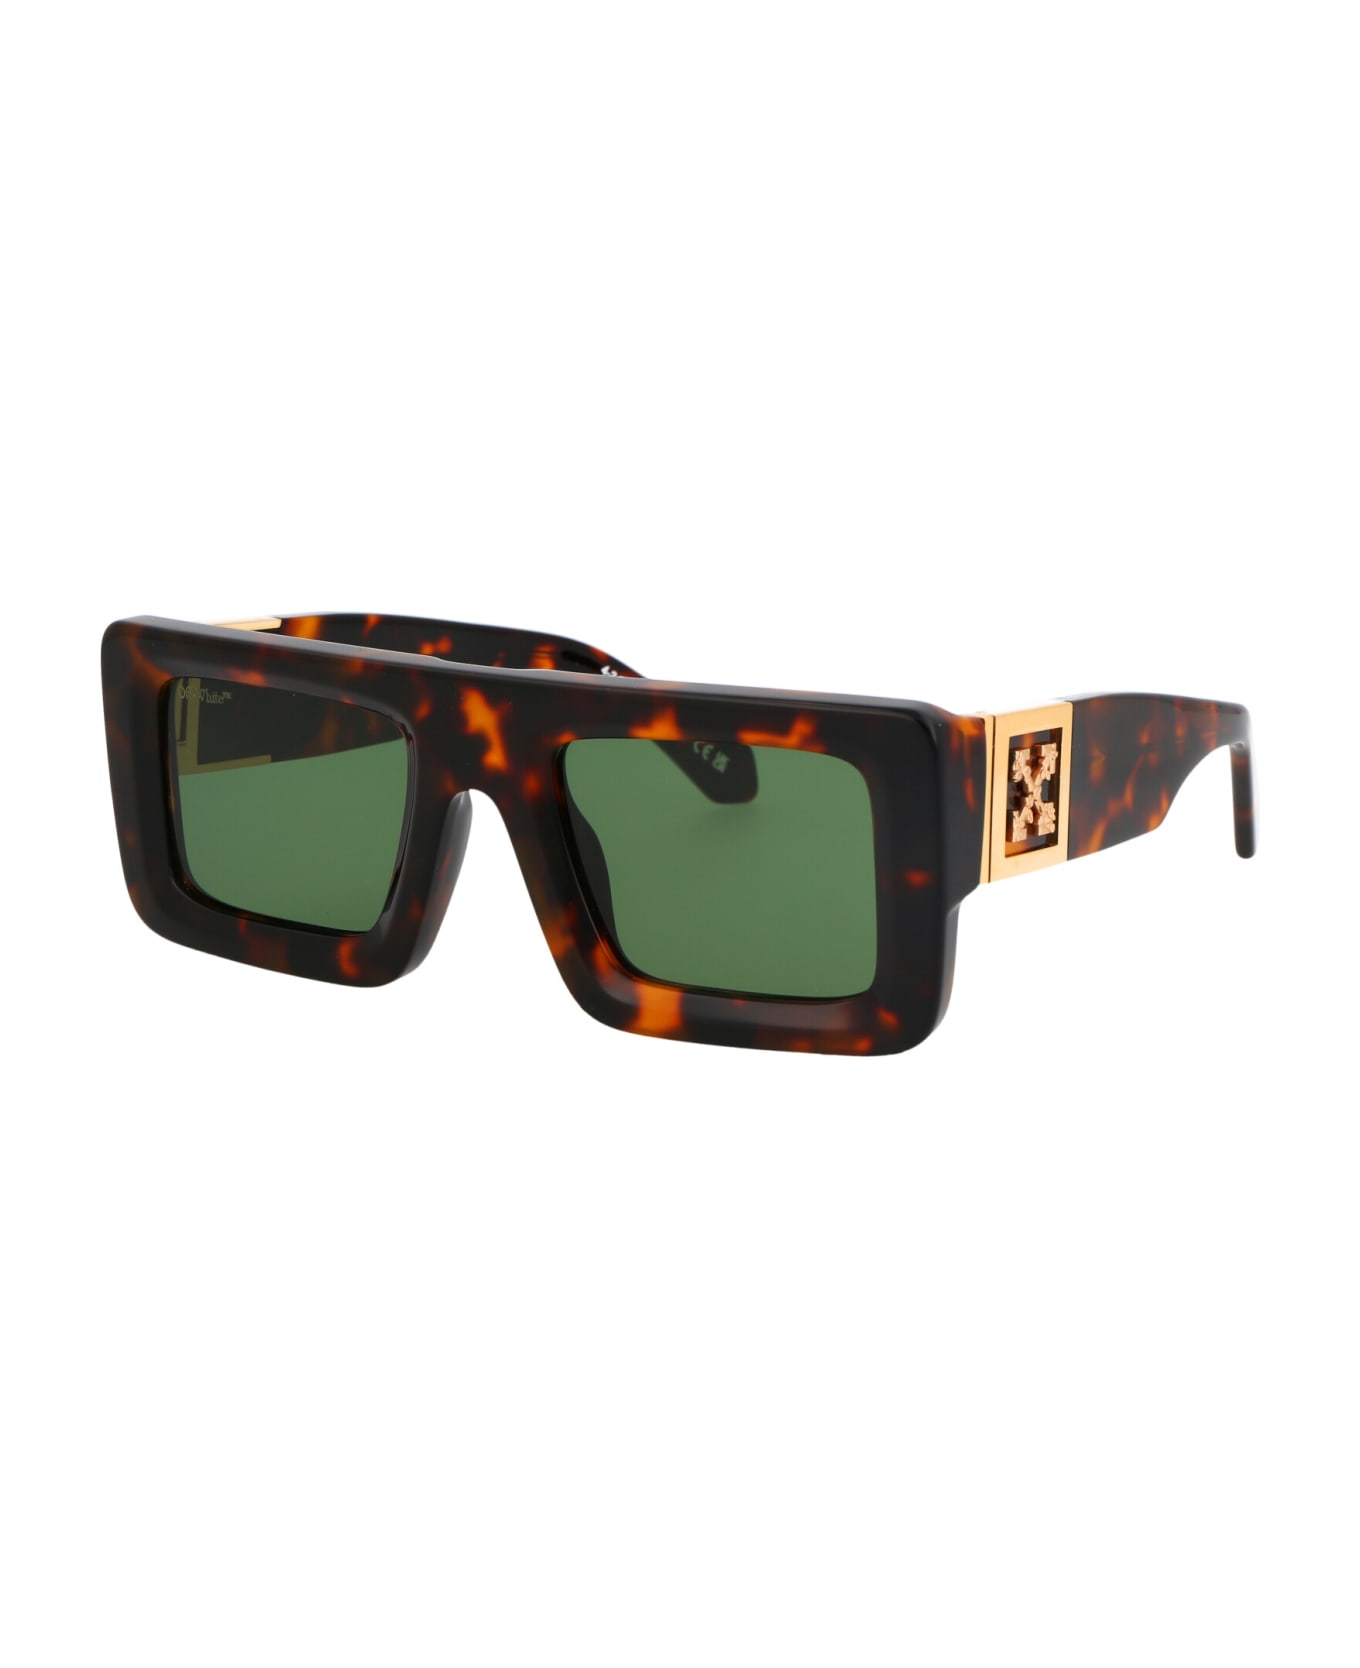 Off-White Leonardo Sunglasses - 6055 HAVANA GREEN サングラス